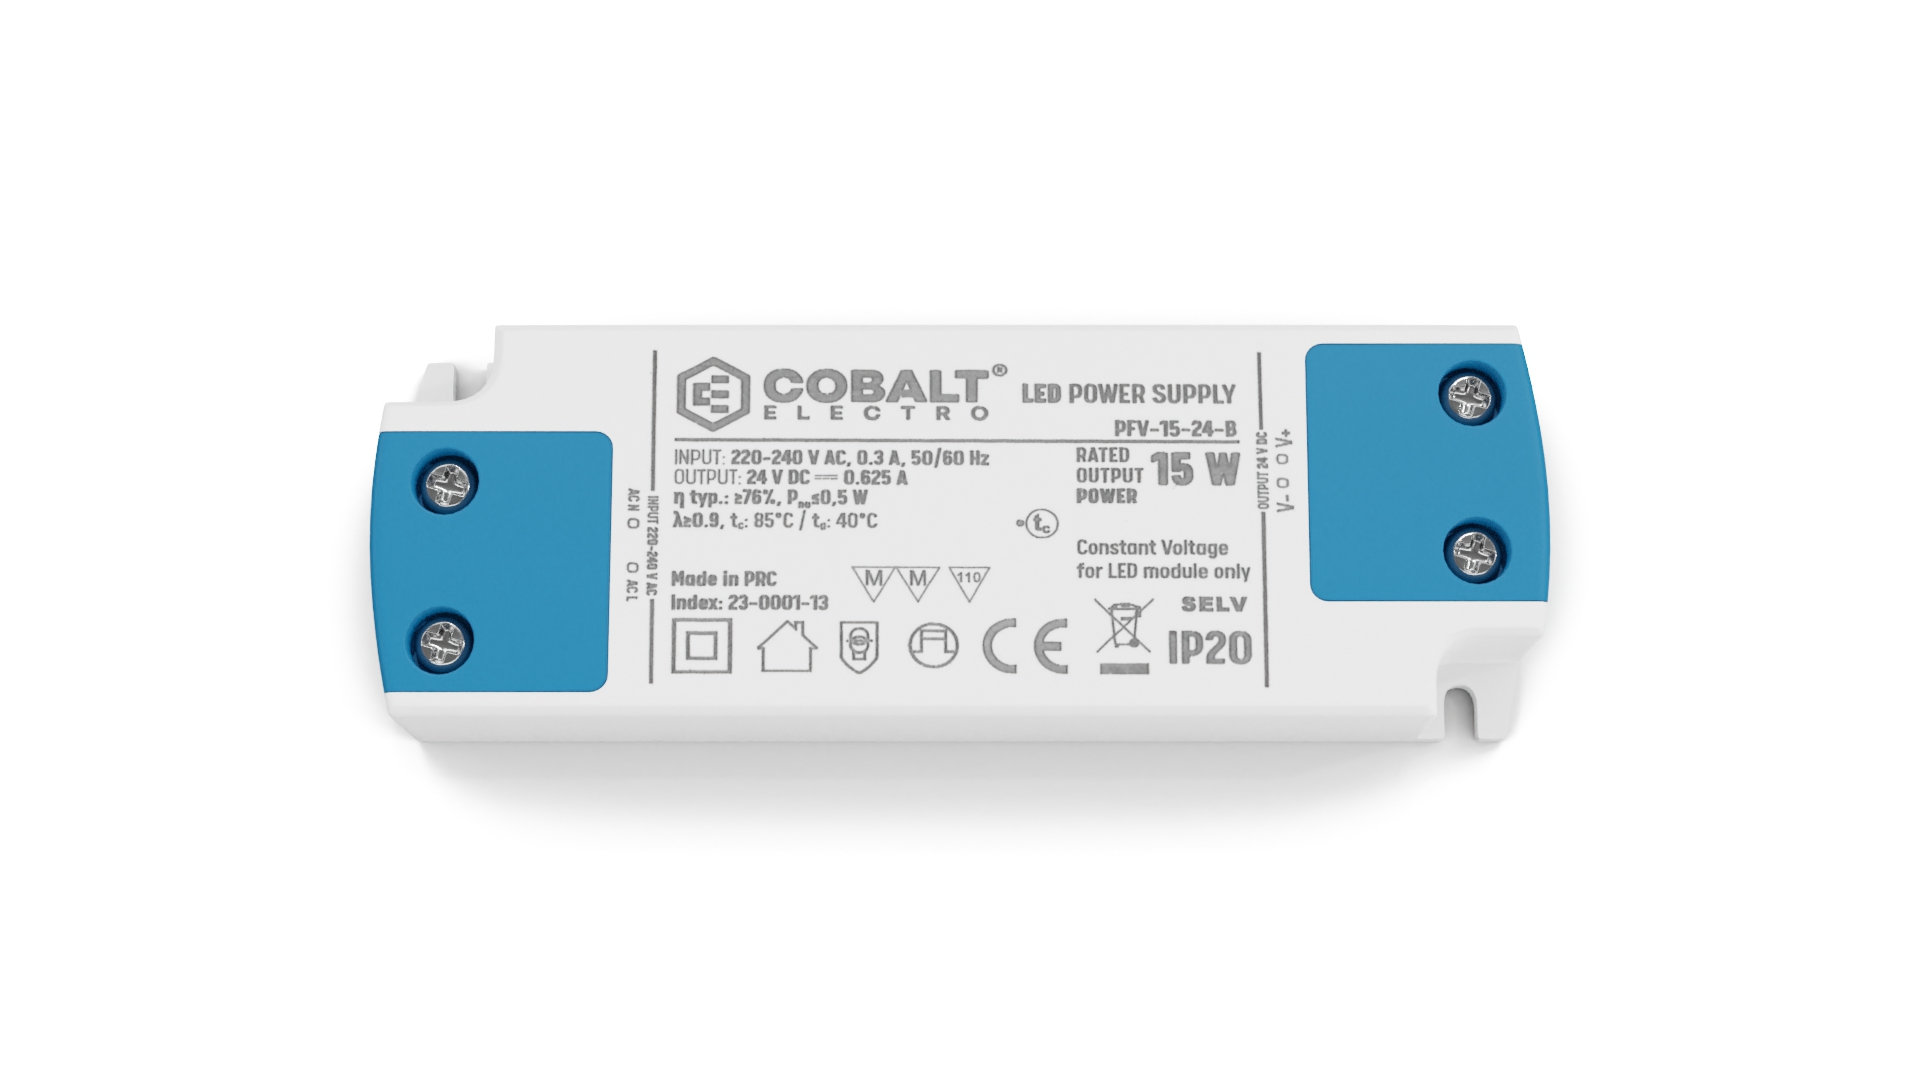 COBALT Electro Liitäntälaite 24V 8W IP20, ON/OFF, PFV-8-24